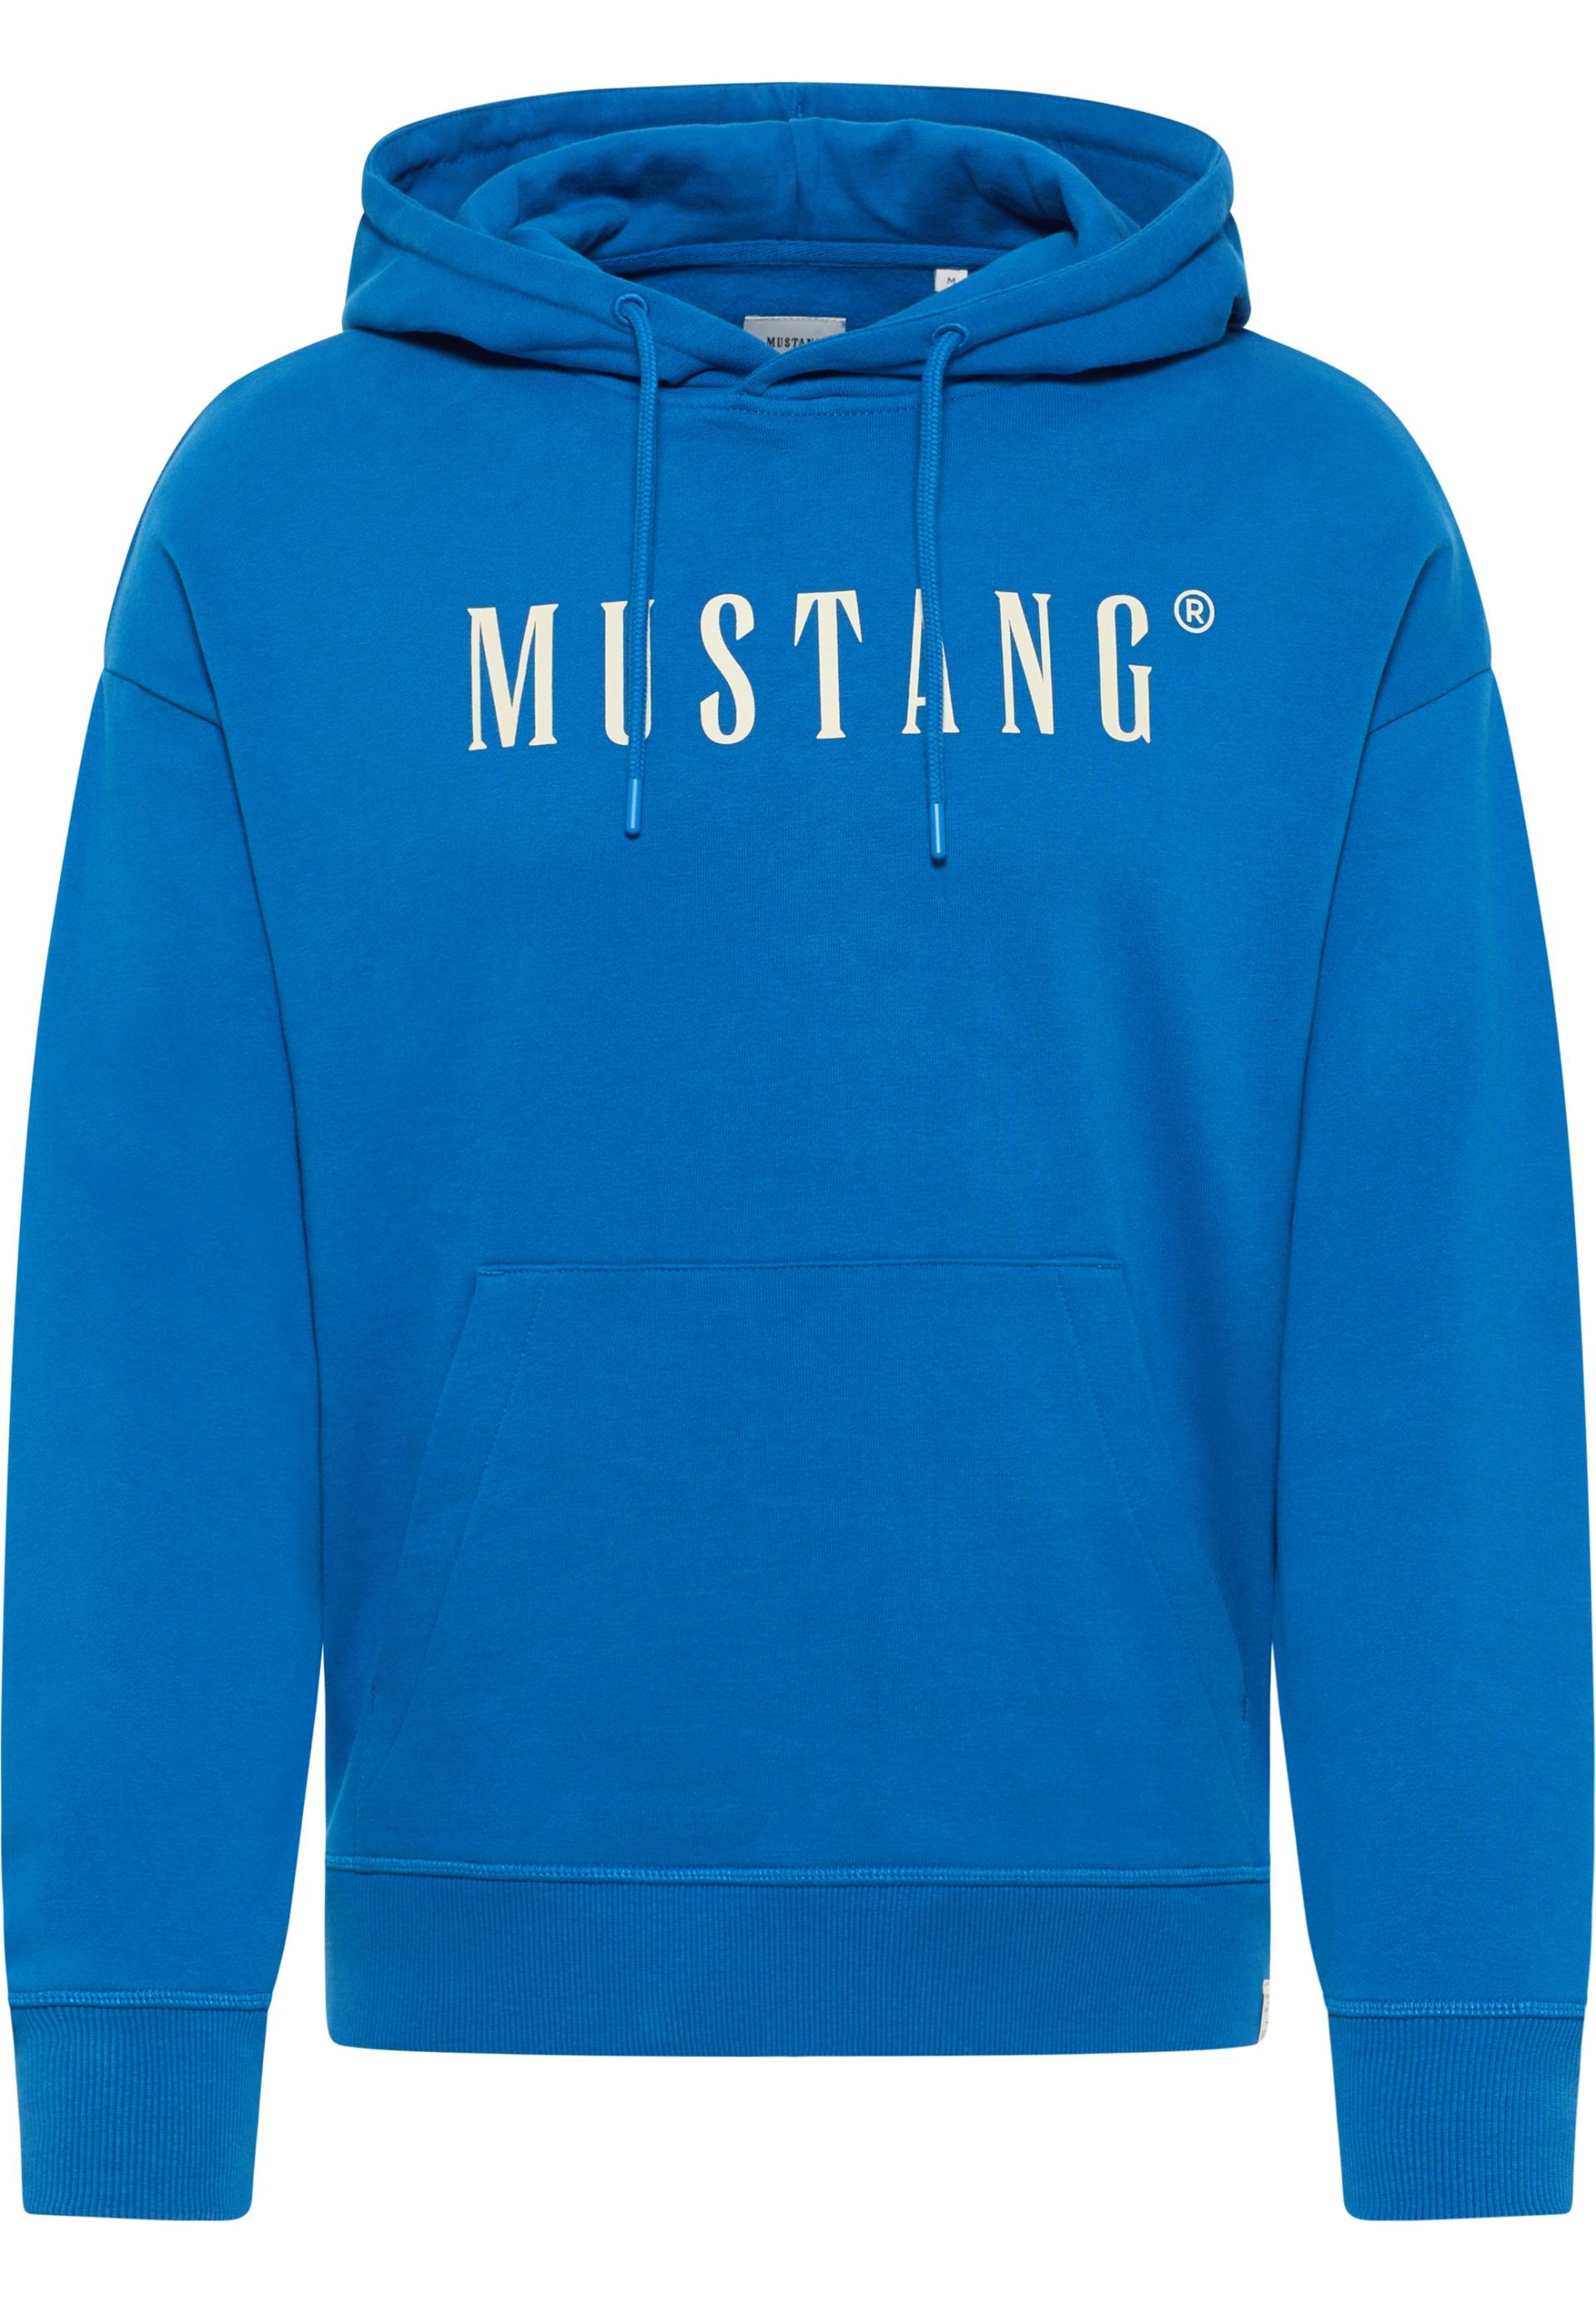 MUSTANG Sweatshirt »Hoodie« von mustang